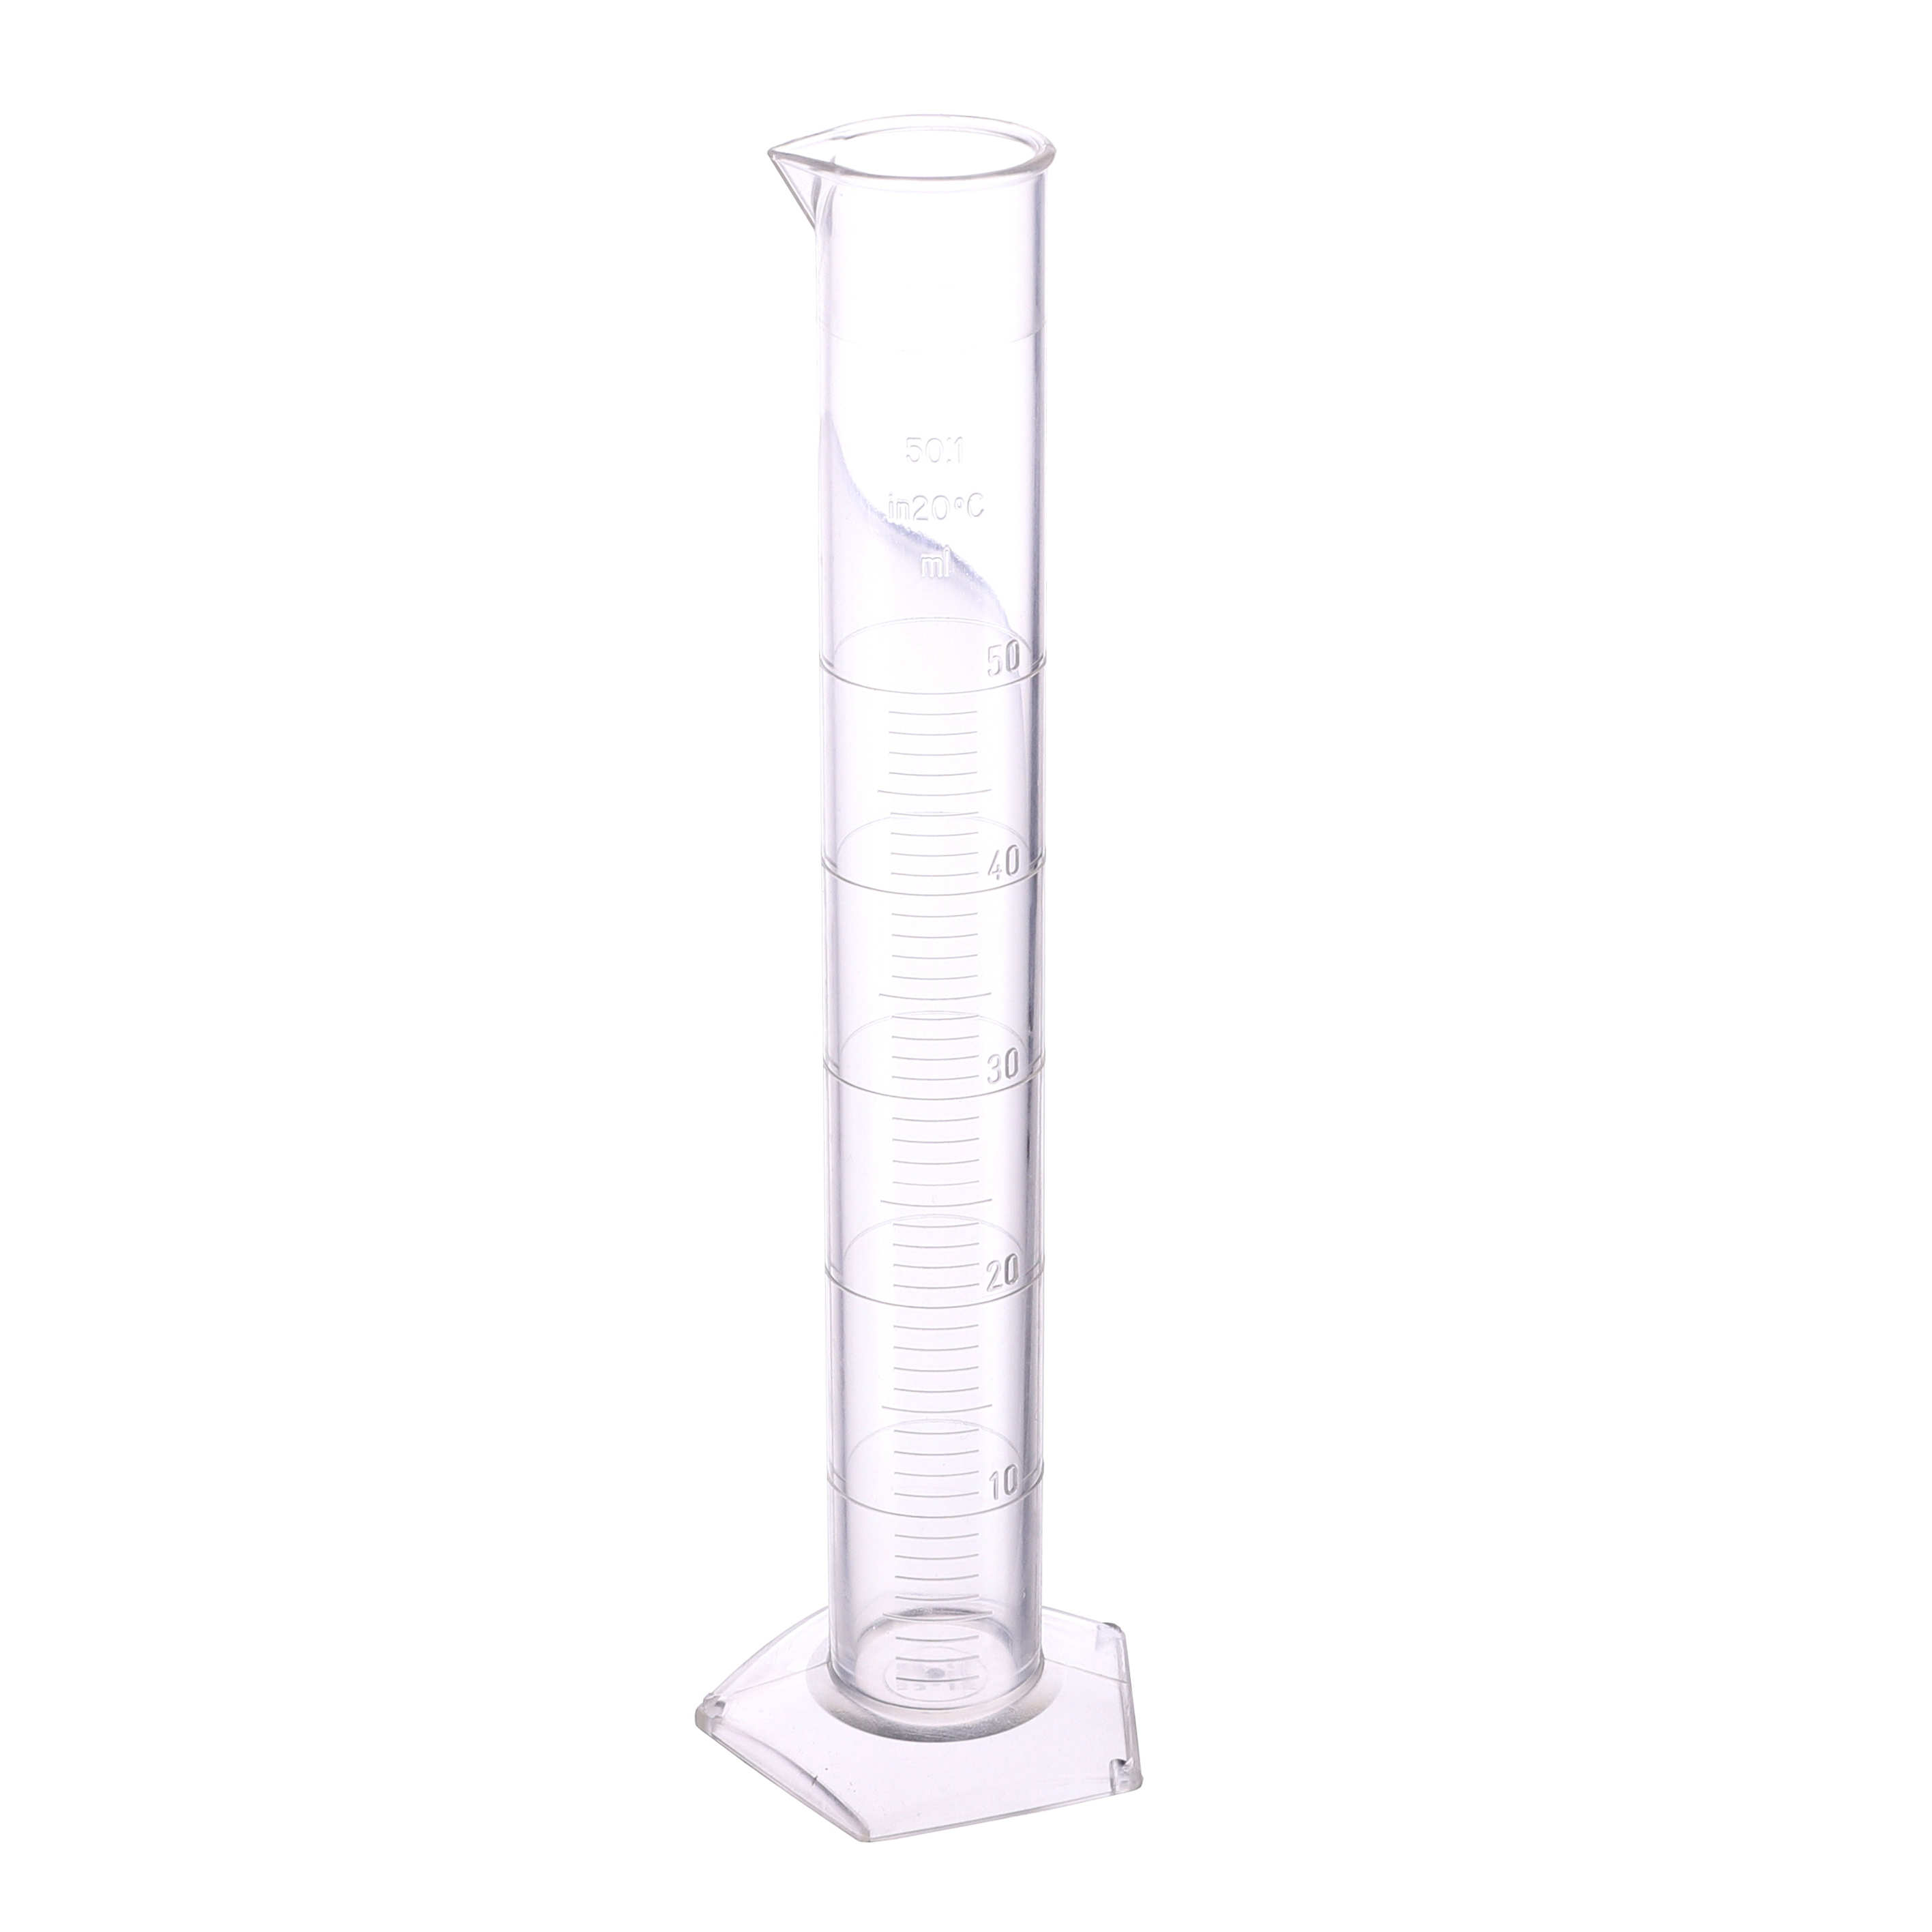 Cp053110aa Plastic Measuring Cylinder 50ml Findel International 1870